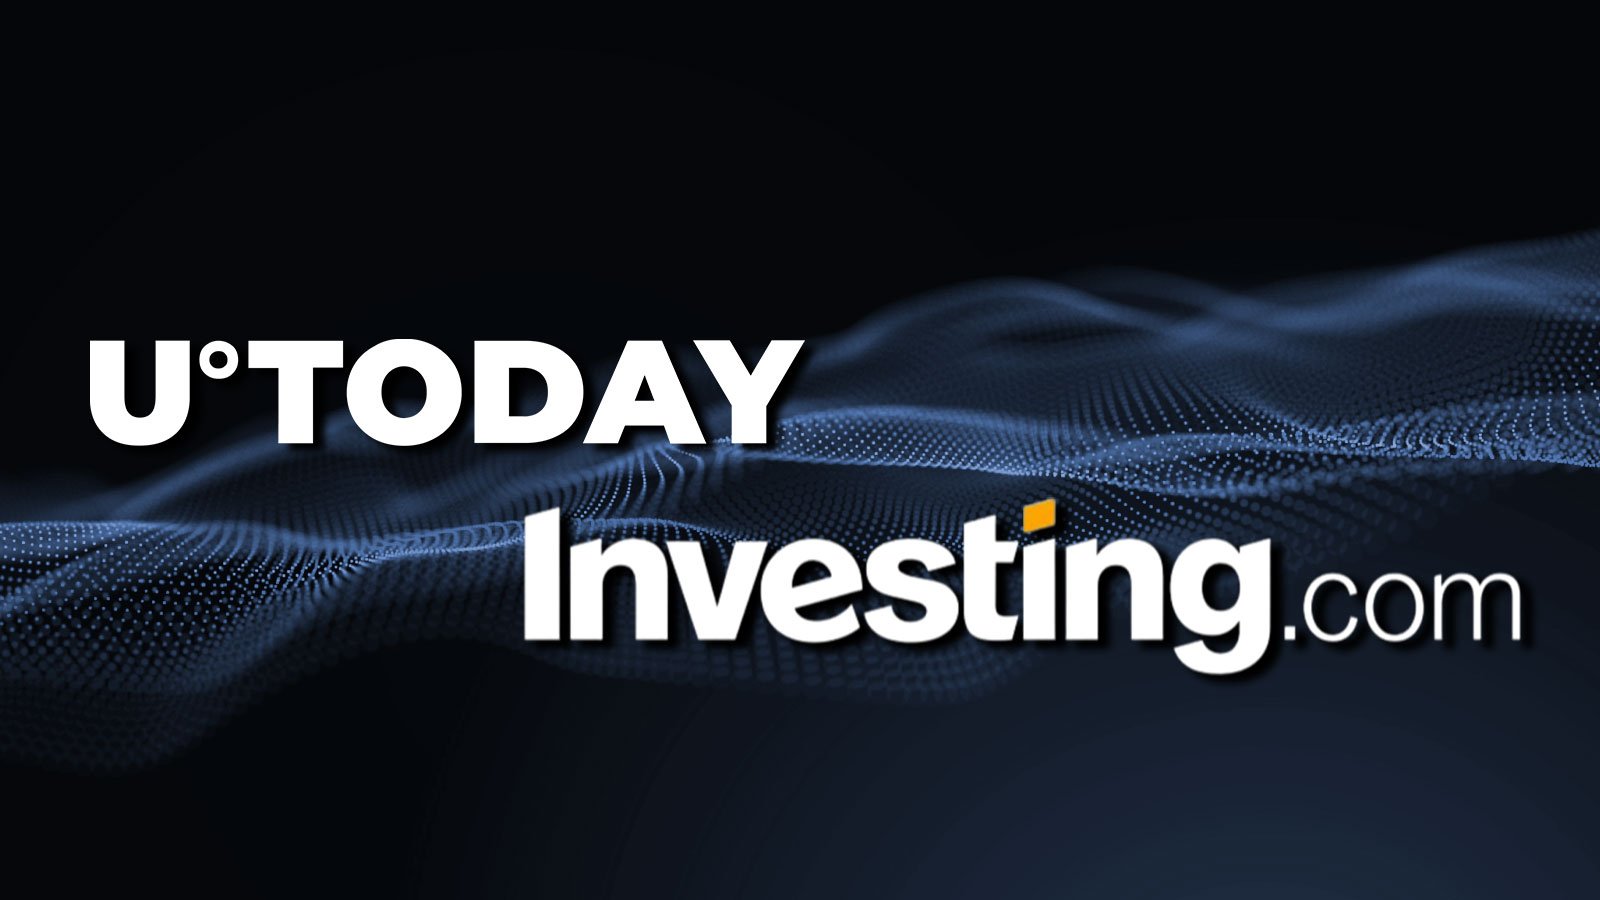 Investing.com Starts Broadcasting Latest Bitcoin (BTC), Ethereum (ETH) News from U.Today